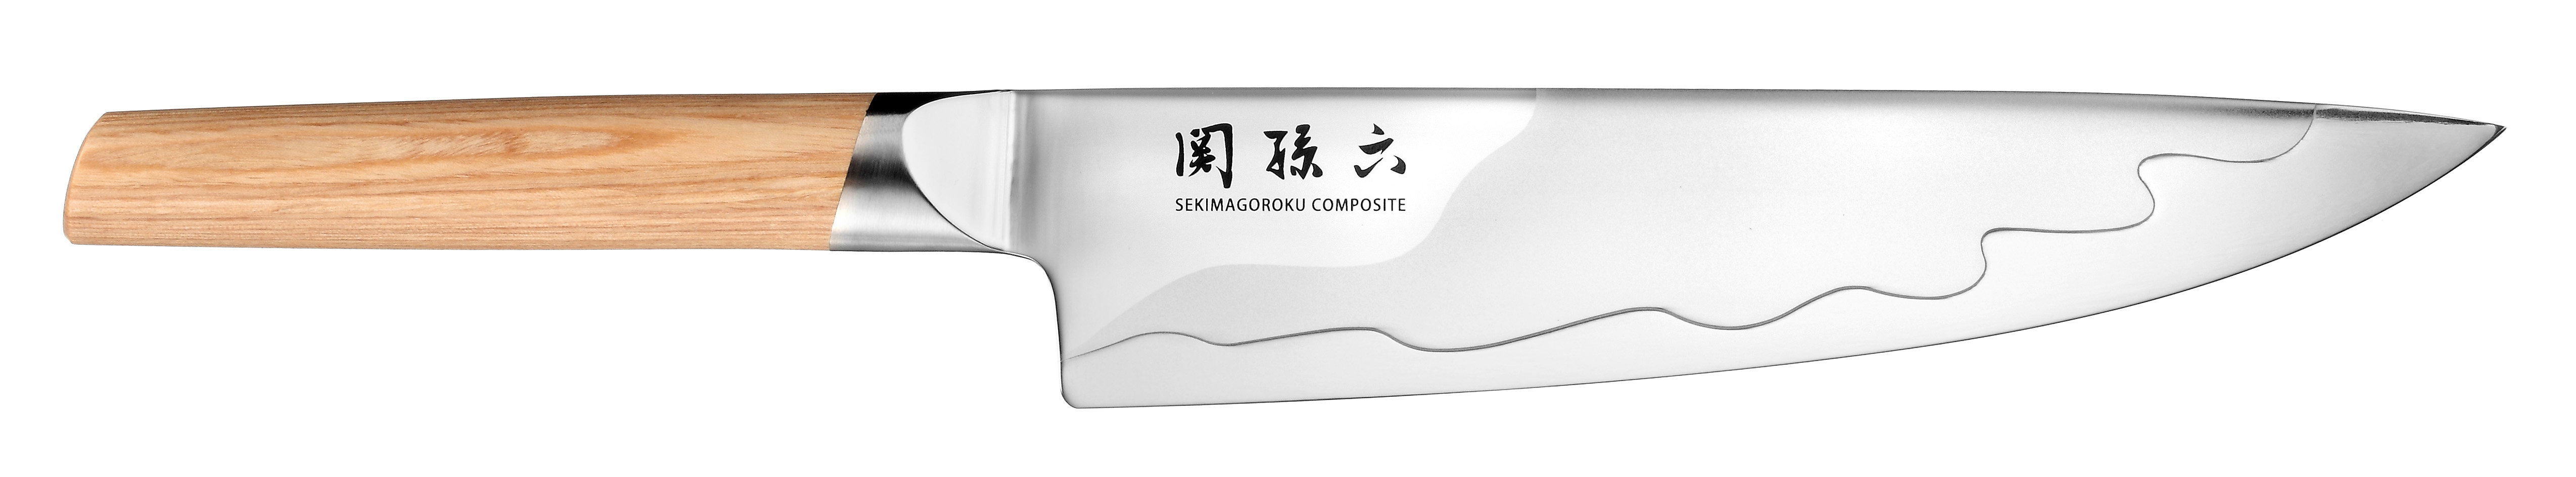 KAI SEKI MAGOROKU COMPOSITE MGC-0406